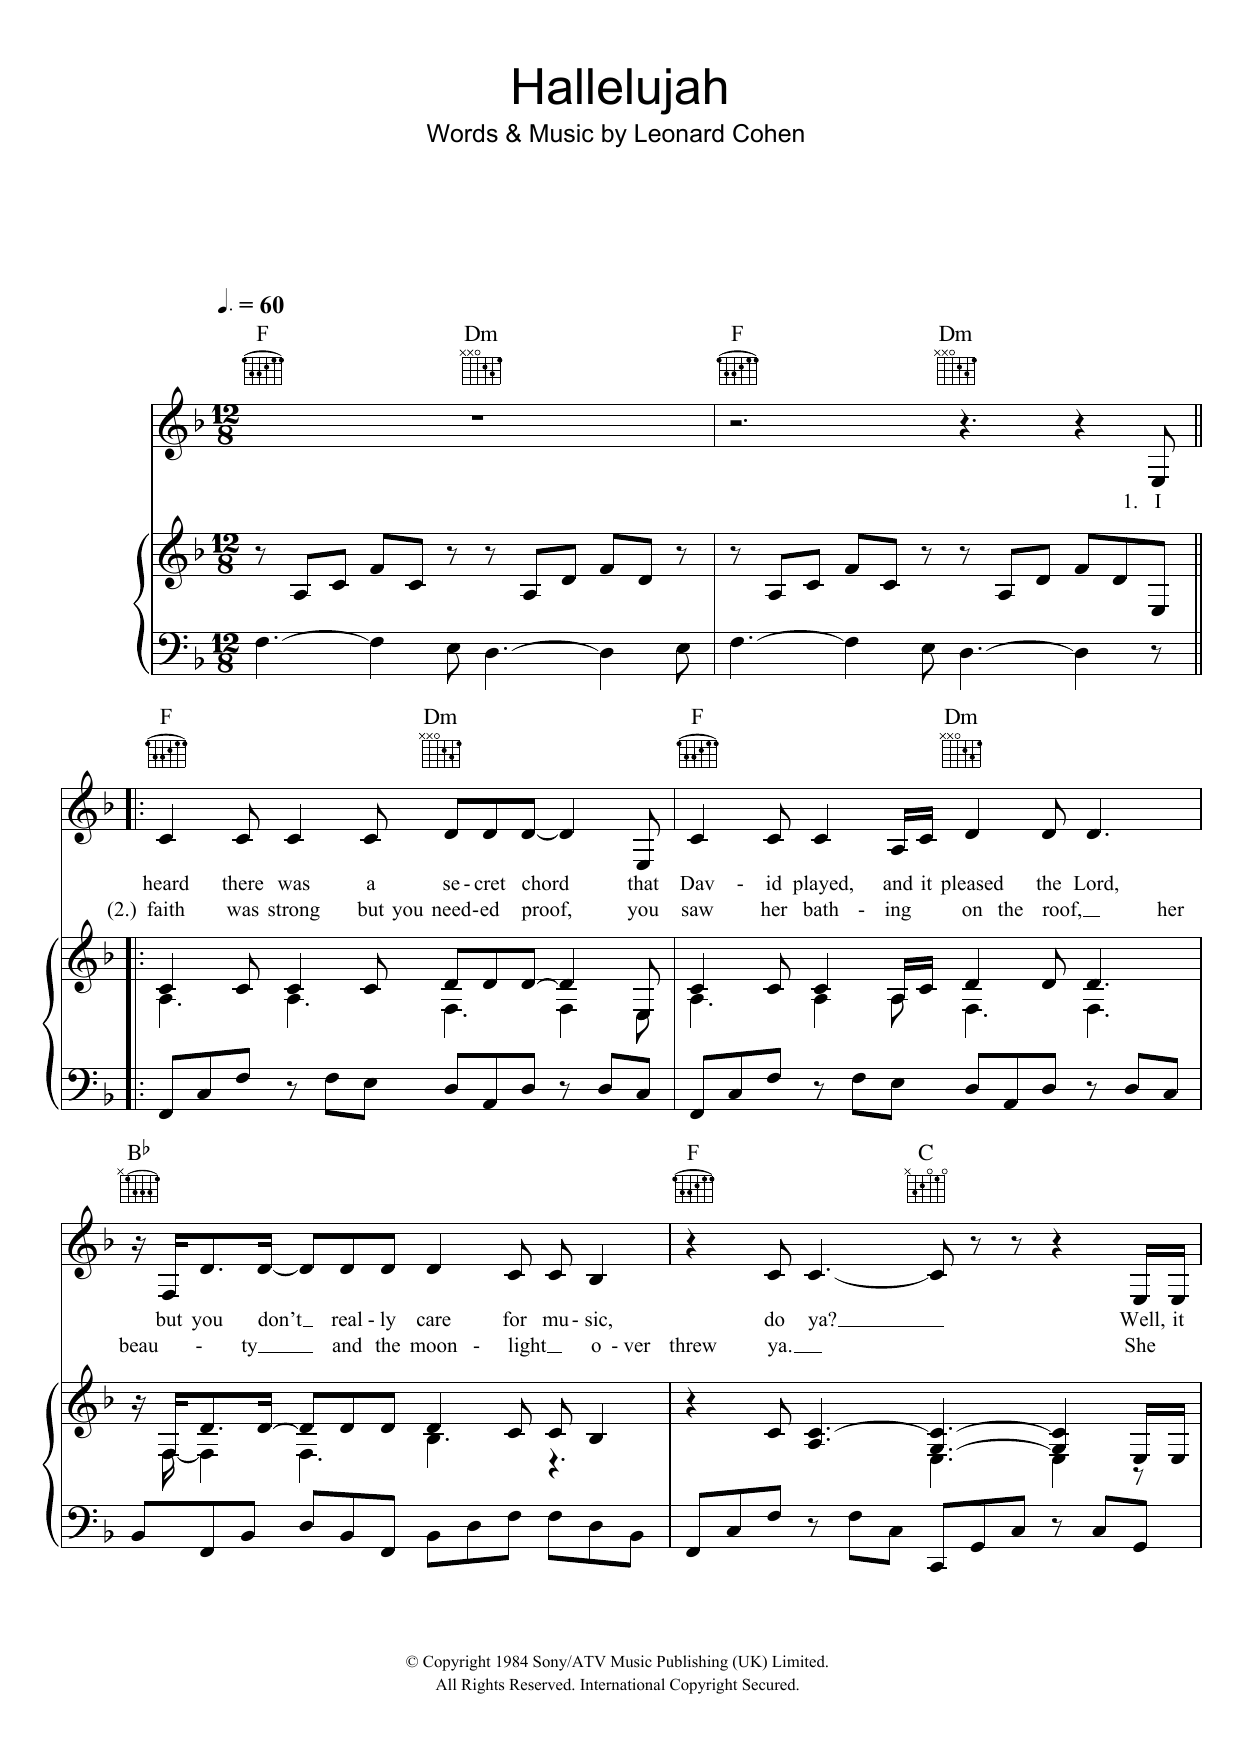 Alexandra Burke Hallelujah Sheet Music Notes & Chords for Clarinet - Download or Print PDF